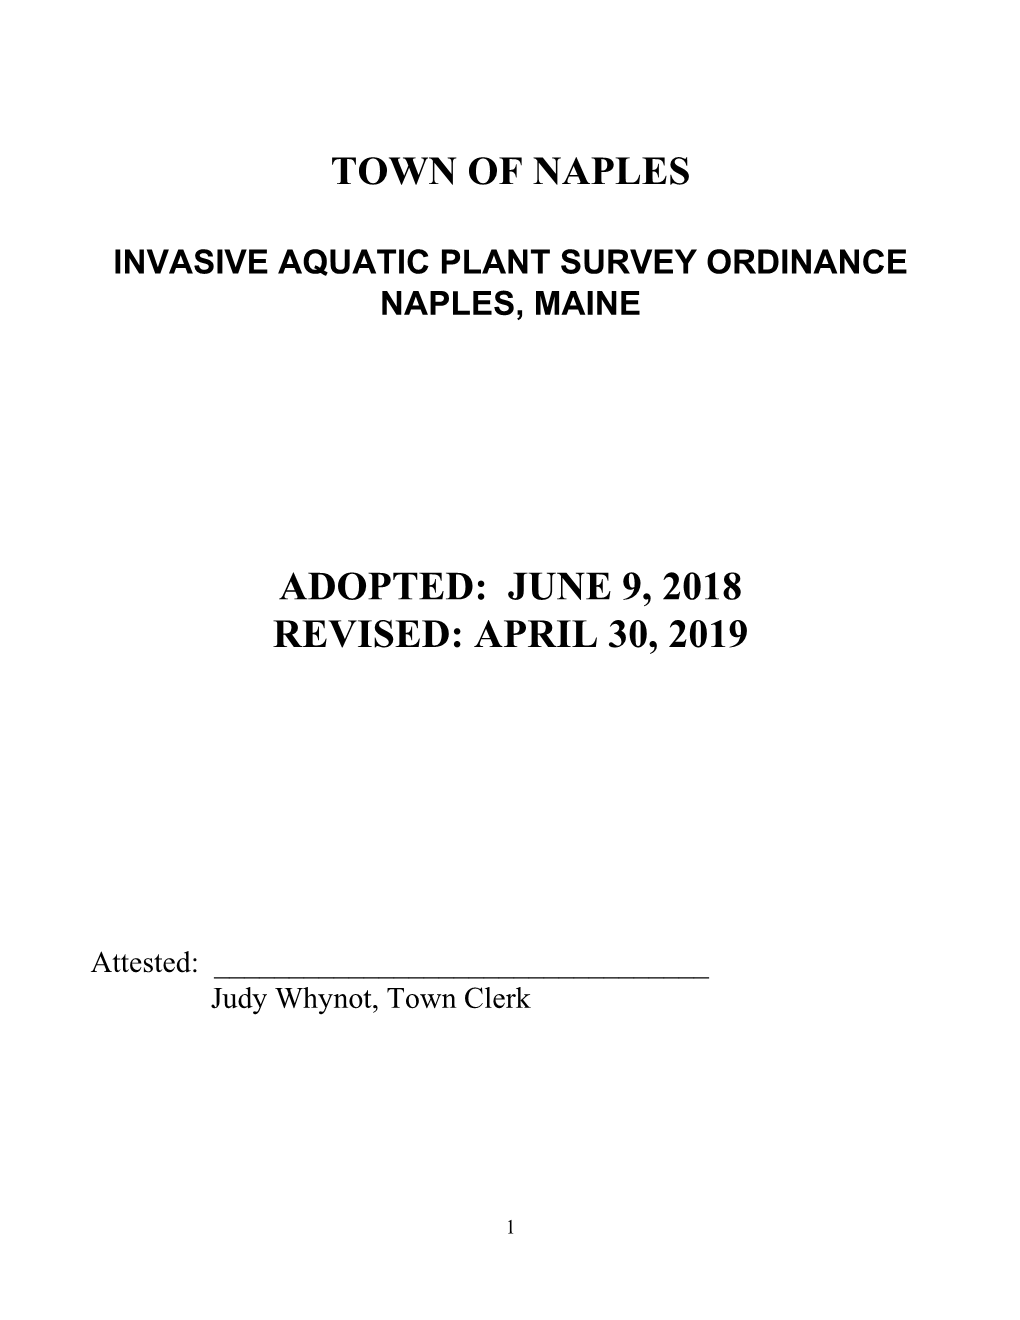 Invasive Aquatic Plant Survey Ordinance Naples, Maine